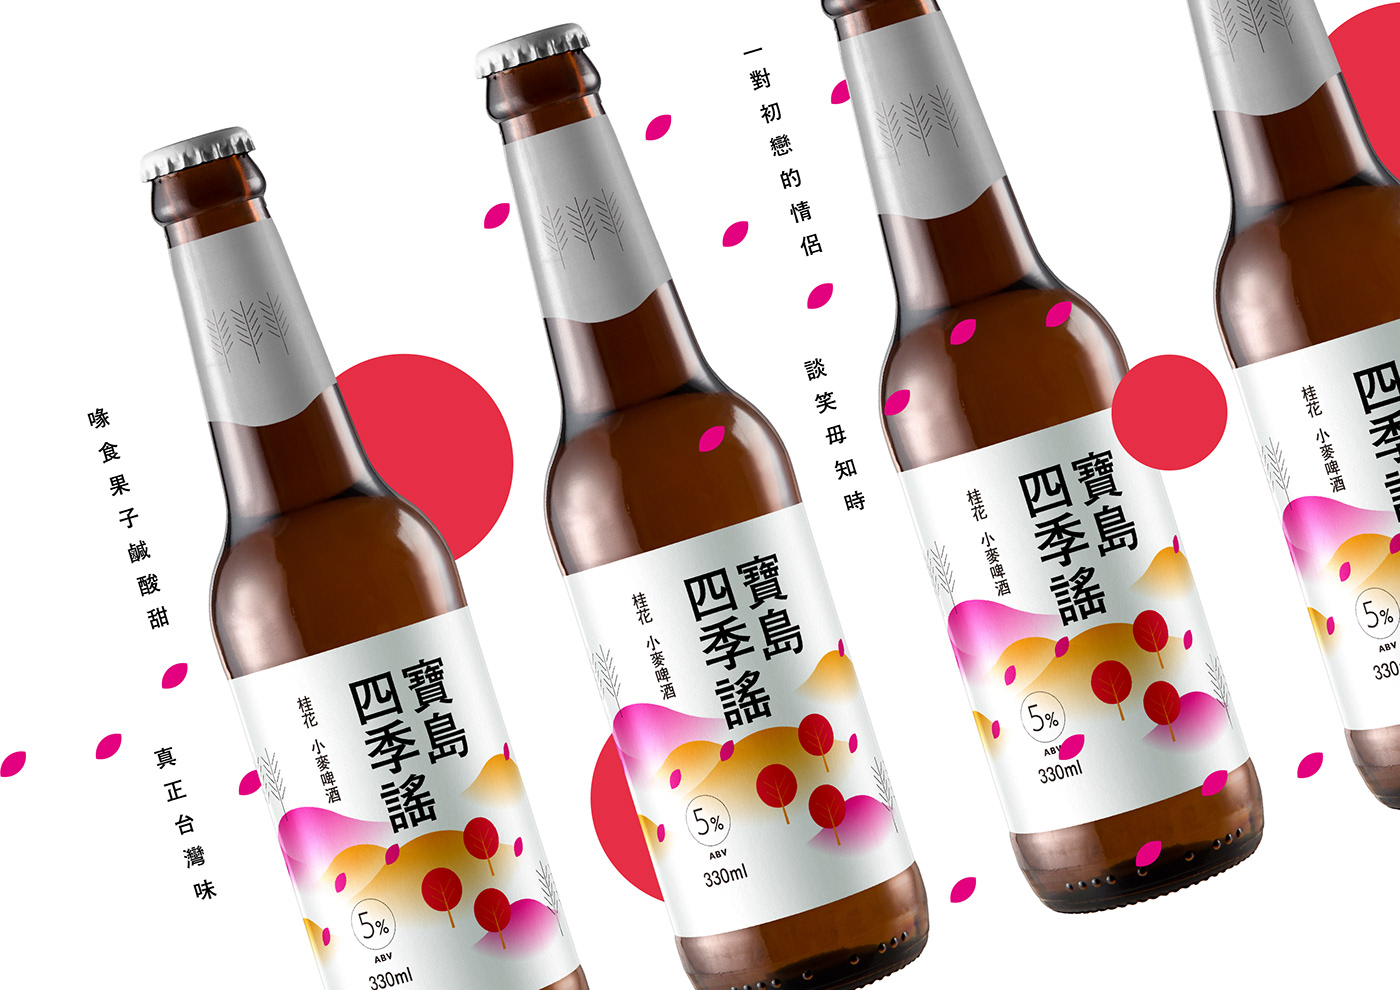 beer branding  graphic Lable Packaging 包裝 品牌 啤酒 瓶標 精釀啤酒